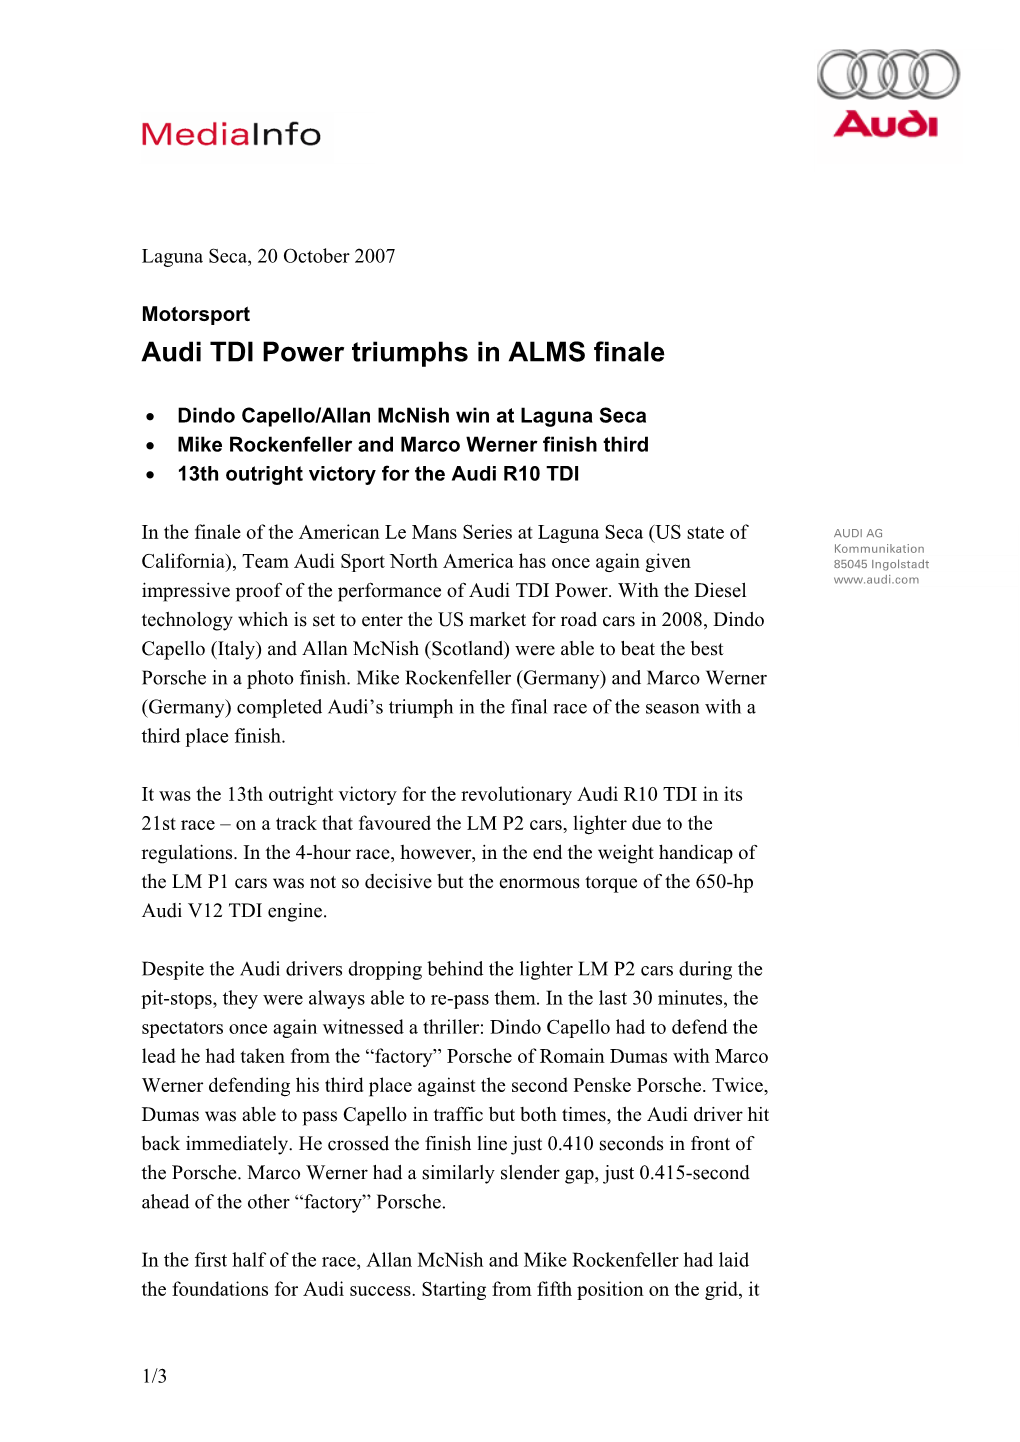 Audi TDI Power Triumphs in ALMS Finale